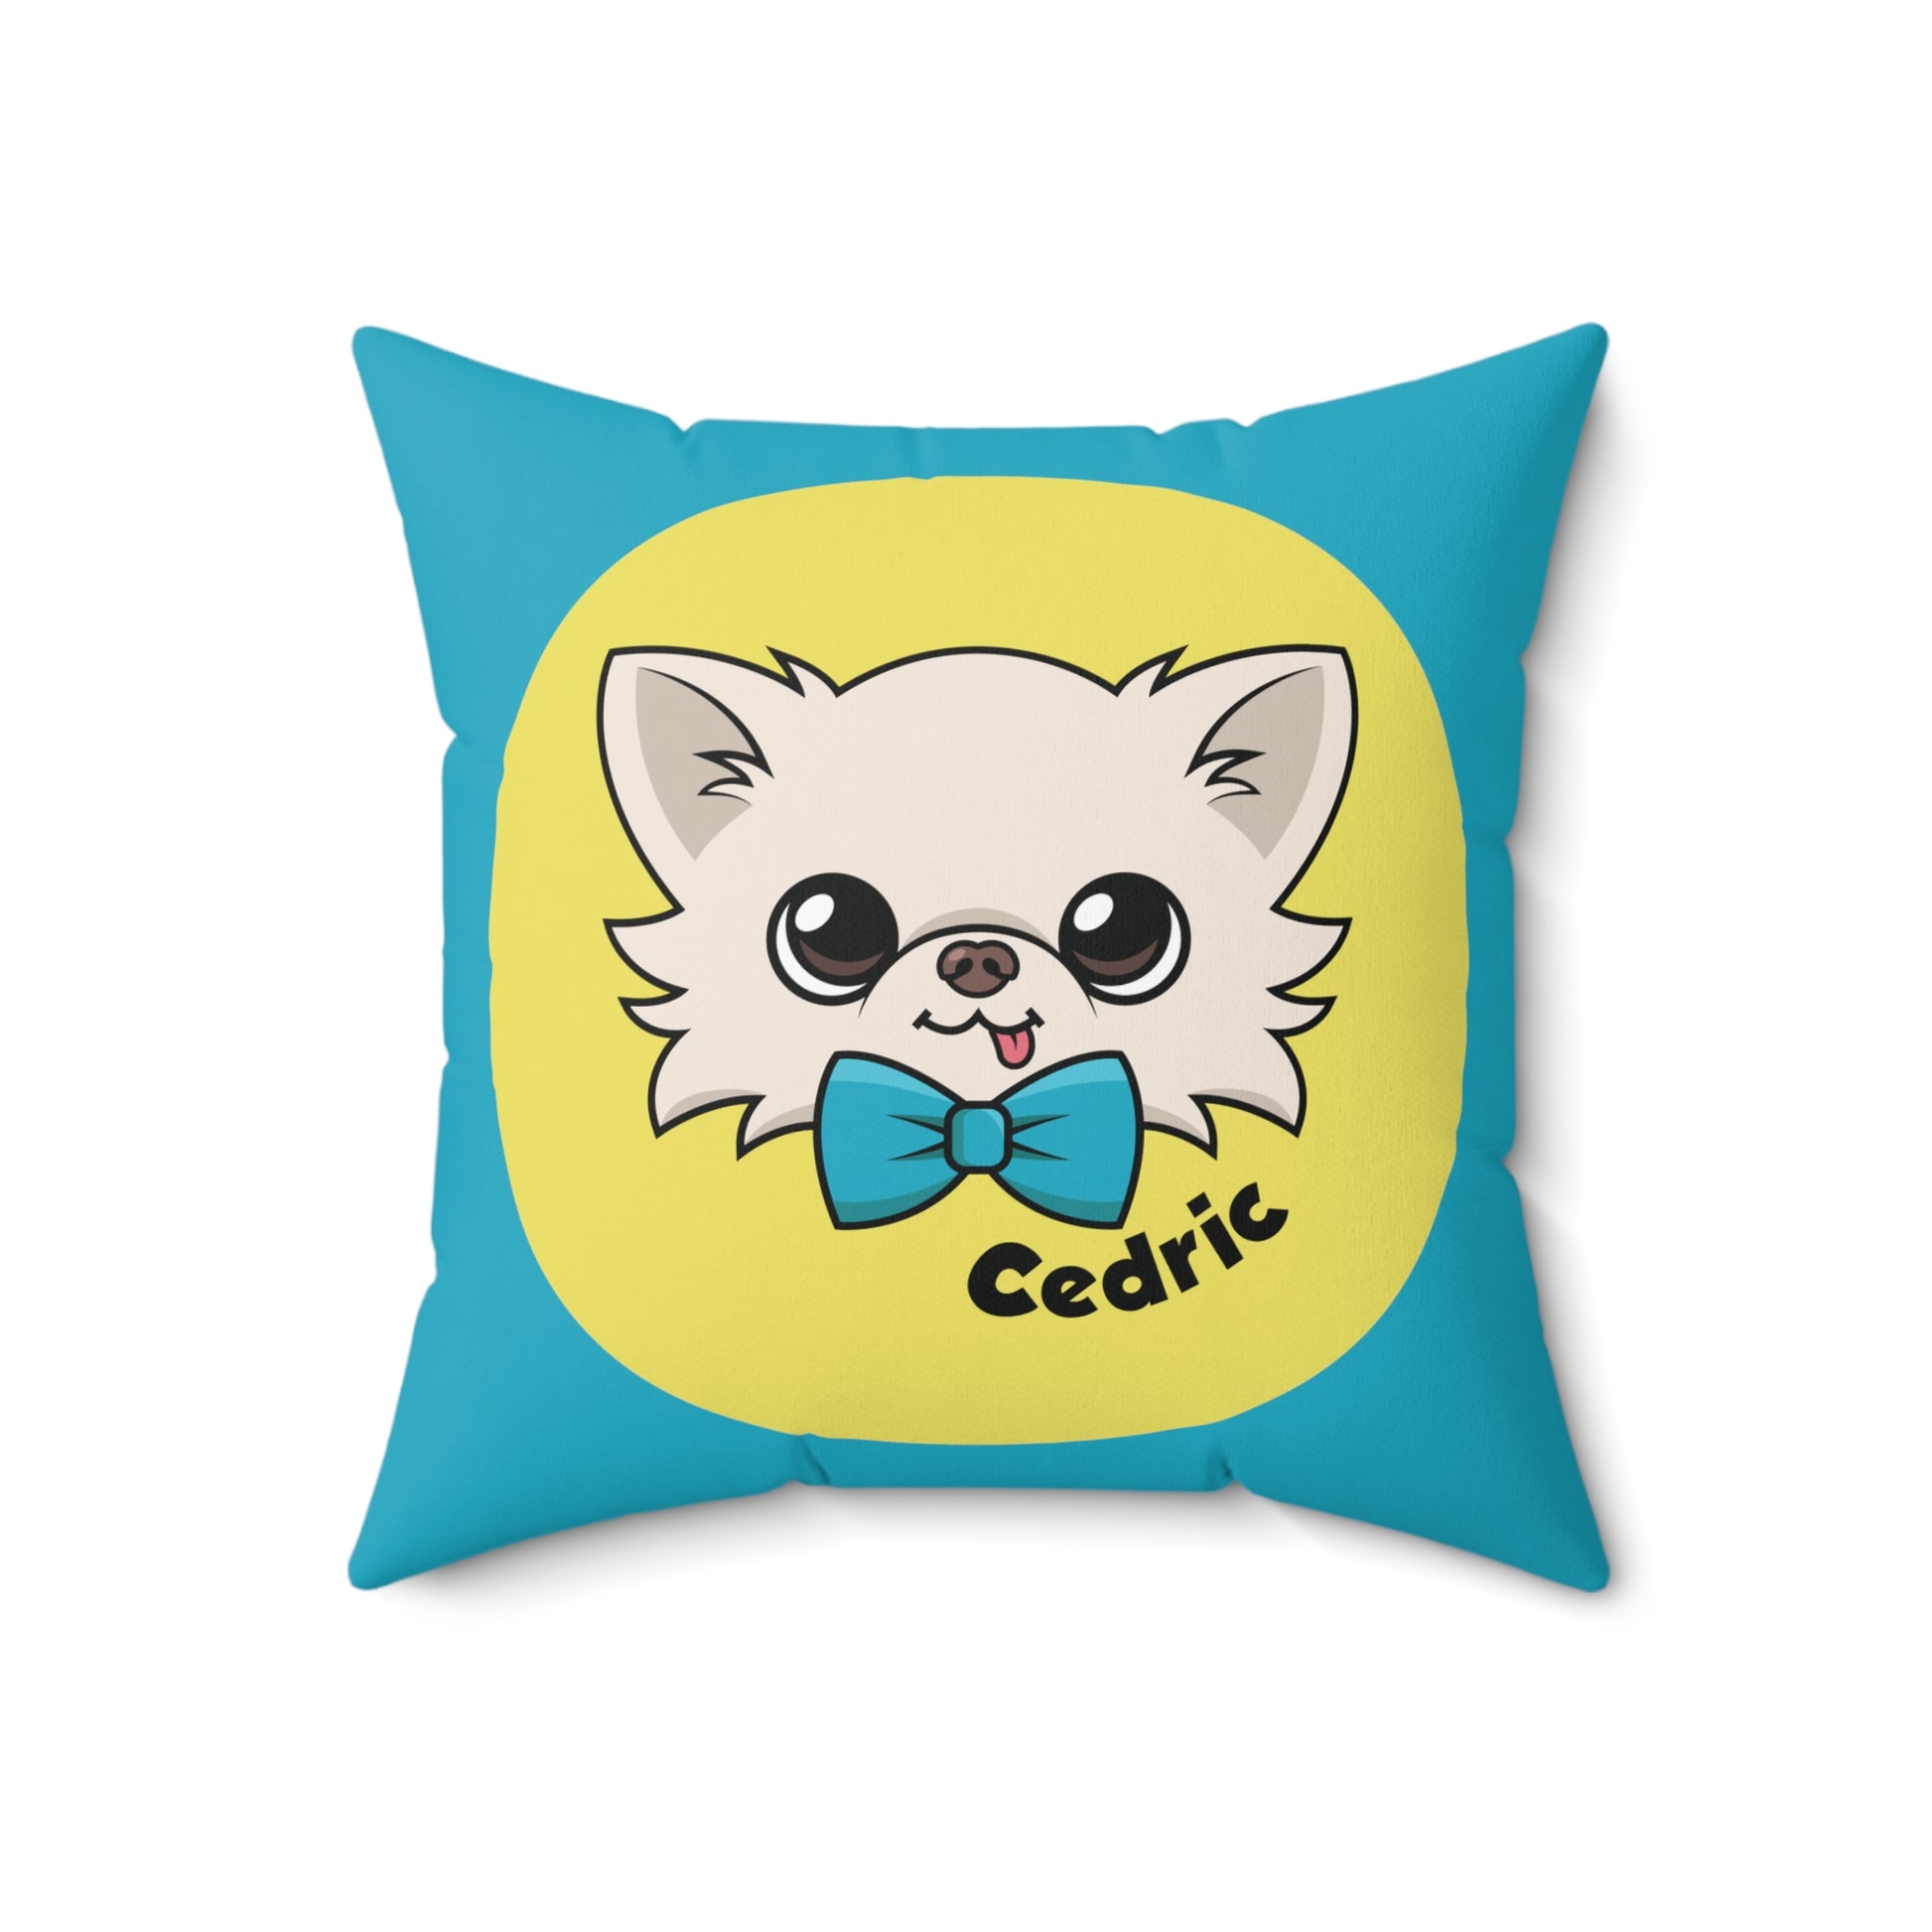 Tiny Chihuahua Cedric's Vibrant Blue Square Pillow - Tiny Chihuahua Shop